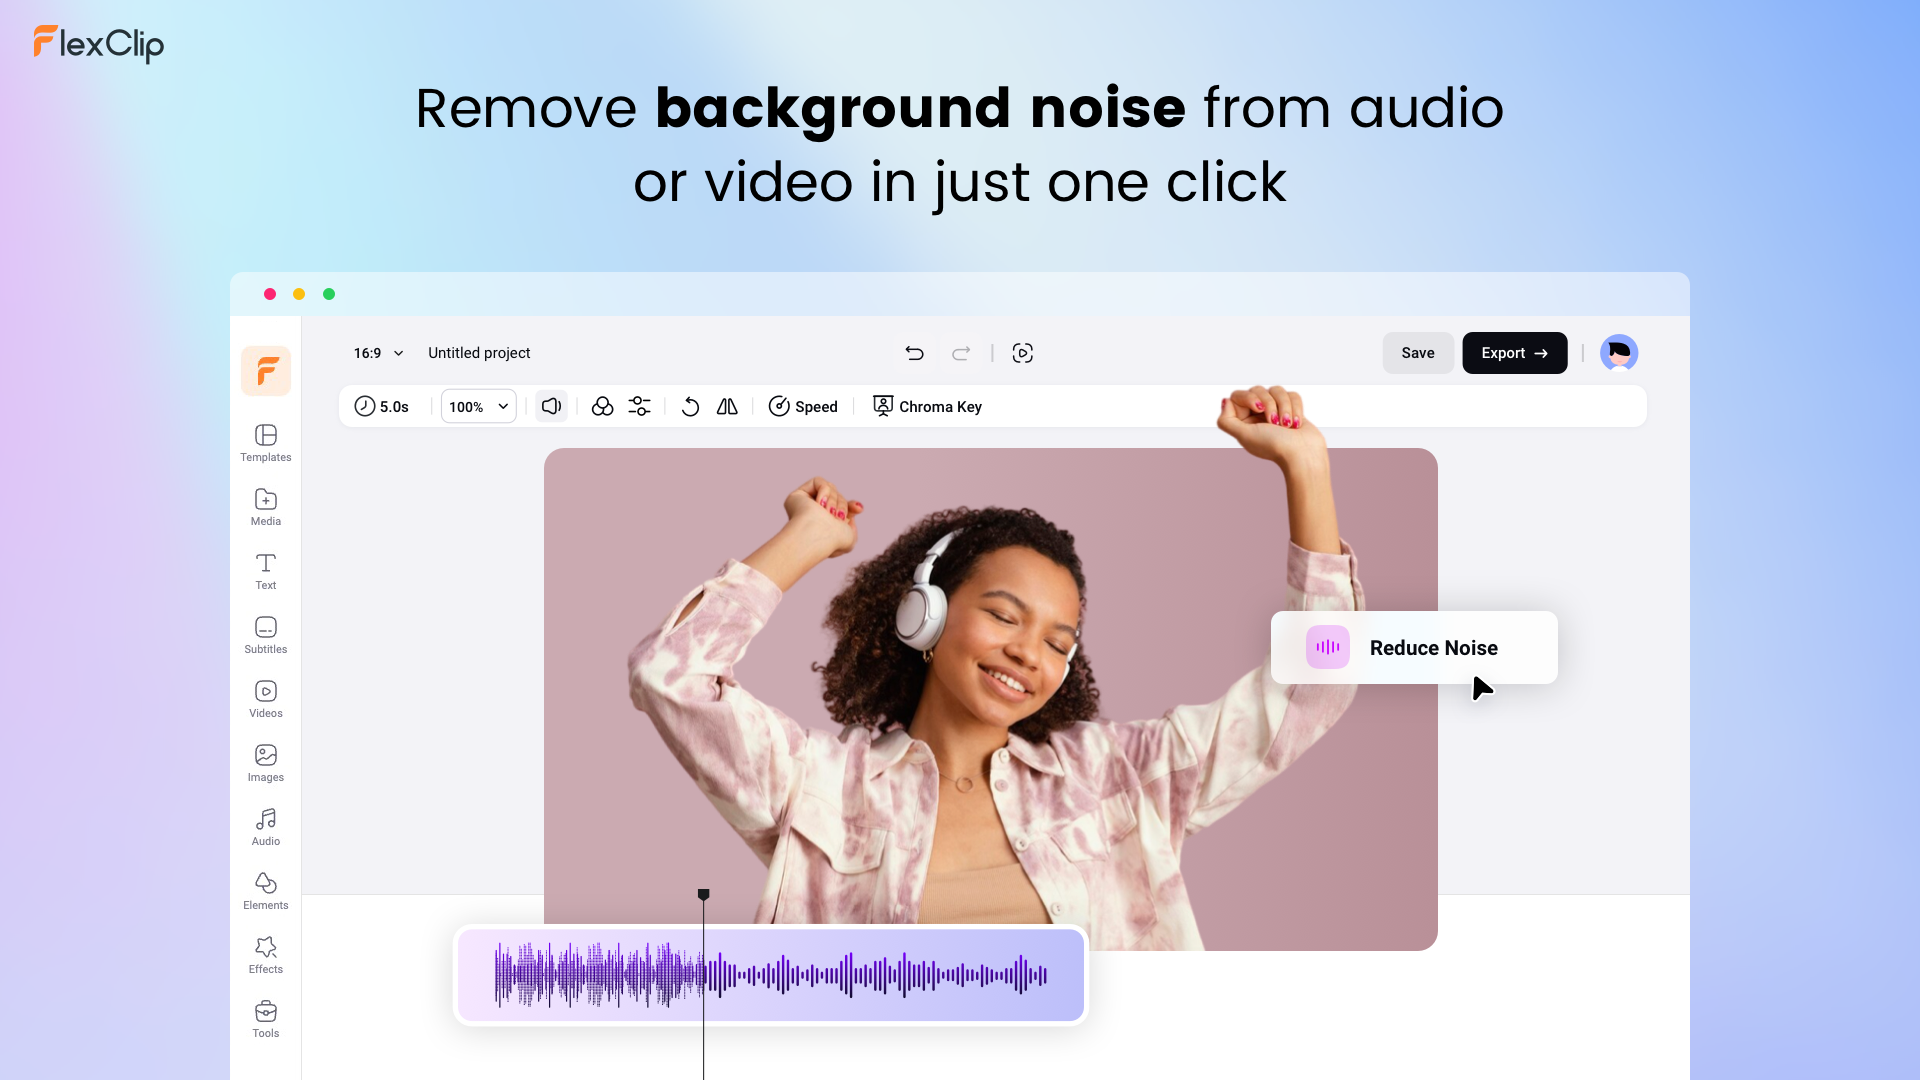 Redutor de ruído de áudio por IA